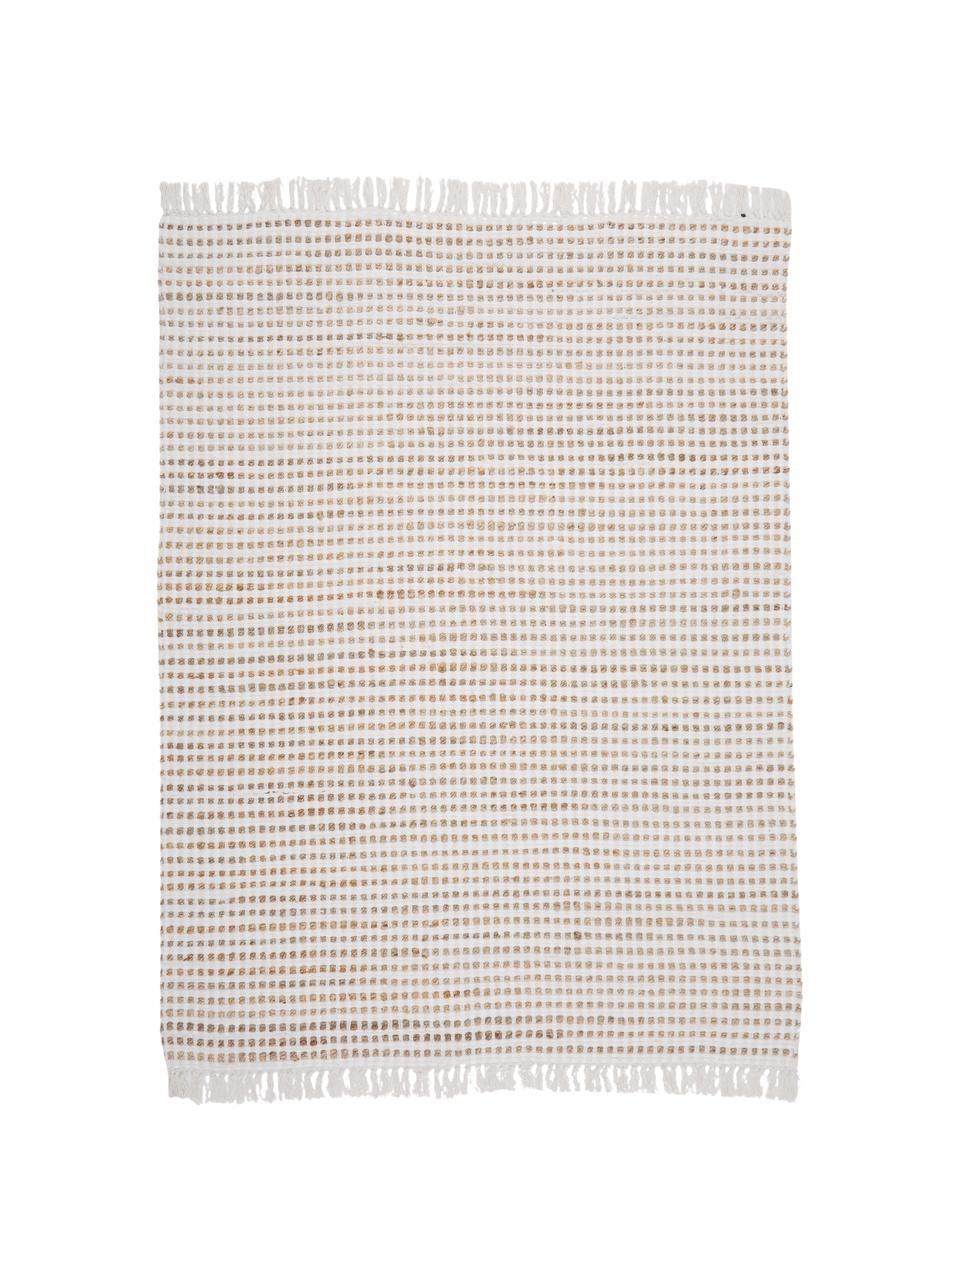 Teppich Fiesta aus Baumwolle/Jute, 55% Baumwolle, 45% Jute, Weiss, Beige, B 200 x L 300 cm (Grösse L)